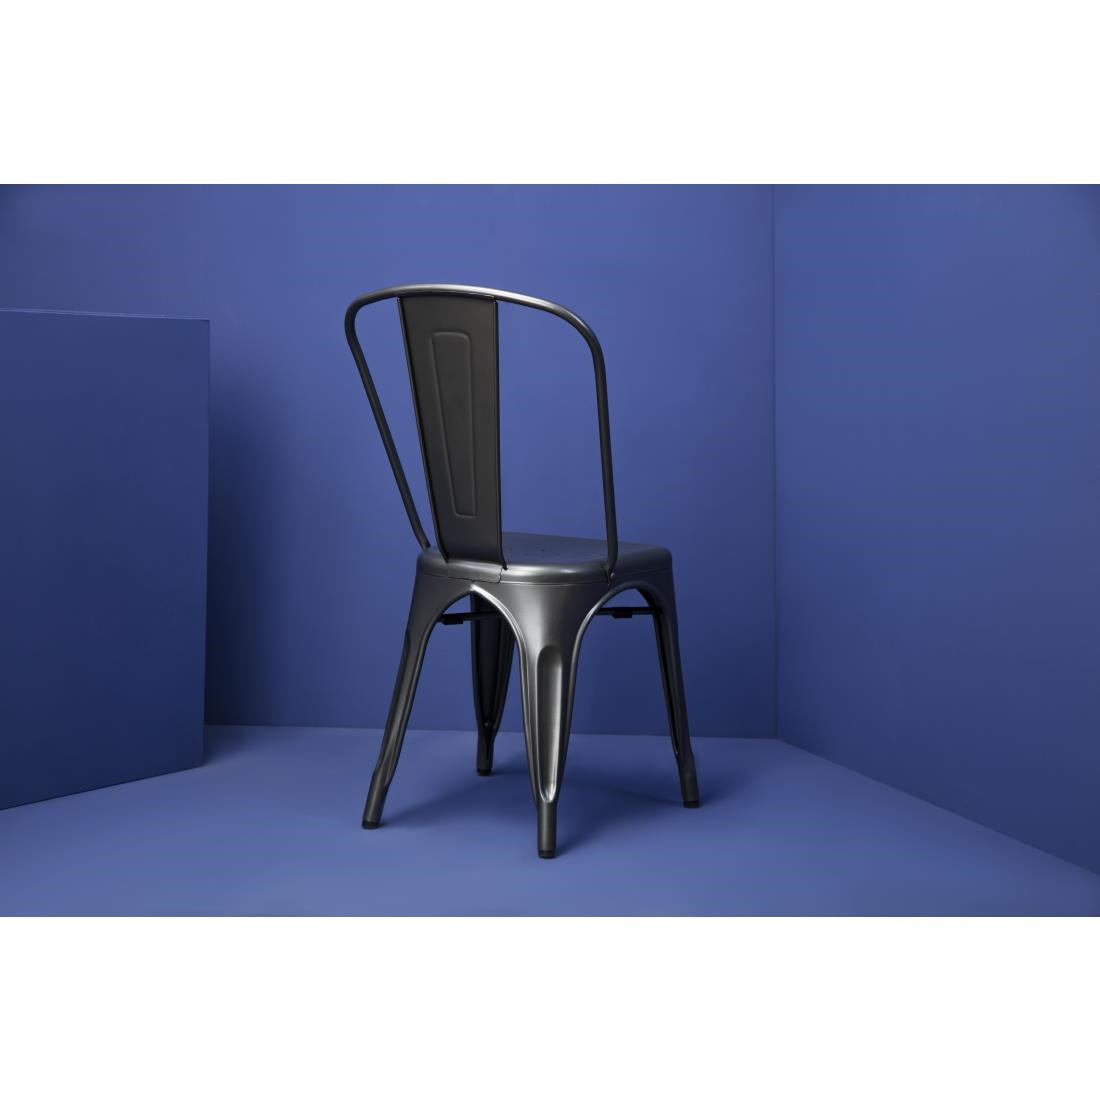 Bolero Bistro Steel Side Chair Gun Metal Grey (Pack 4) JD Catering Equipment Solutions Ltd